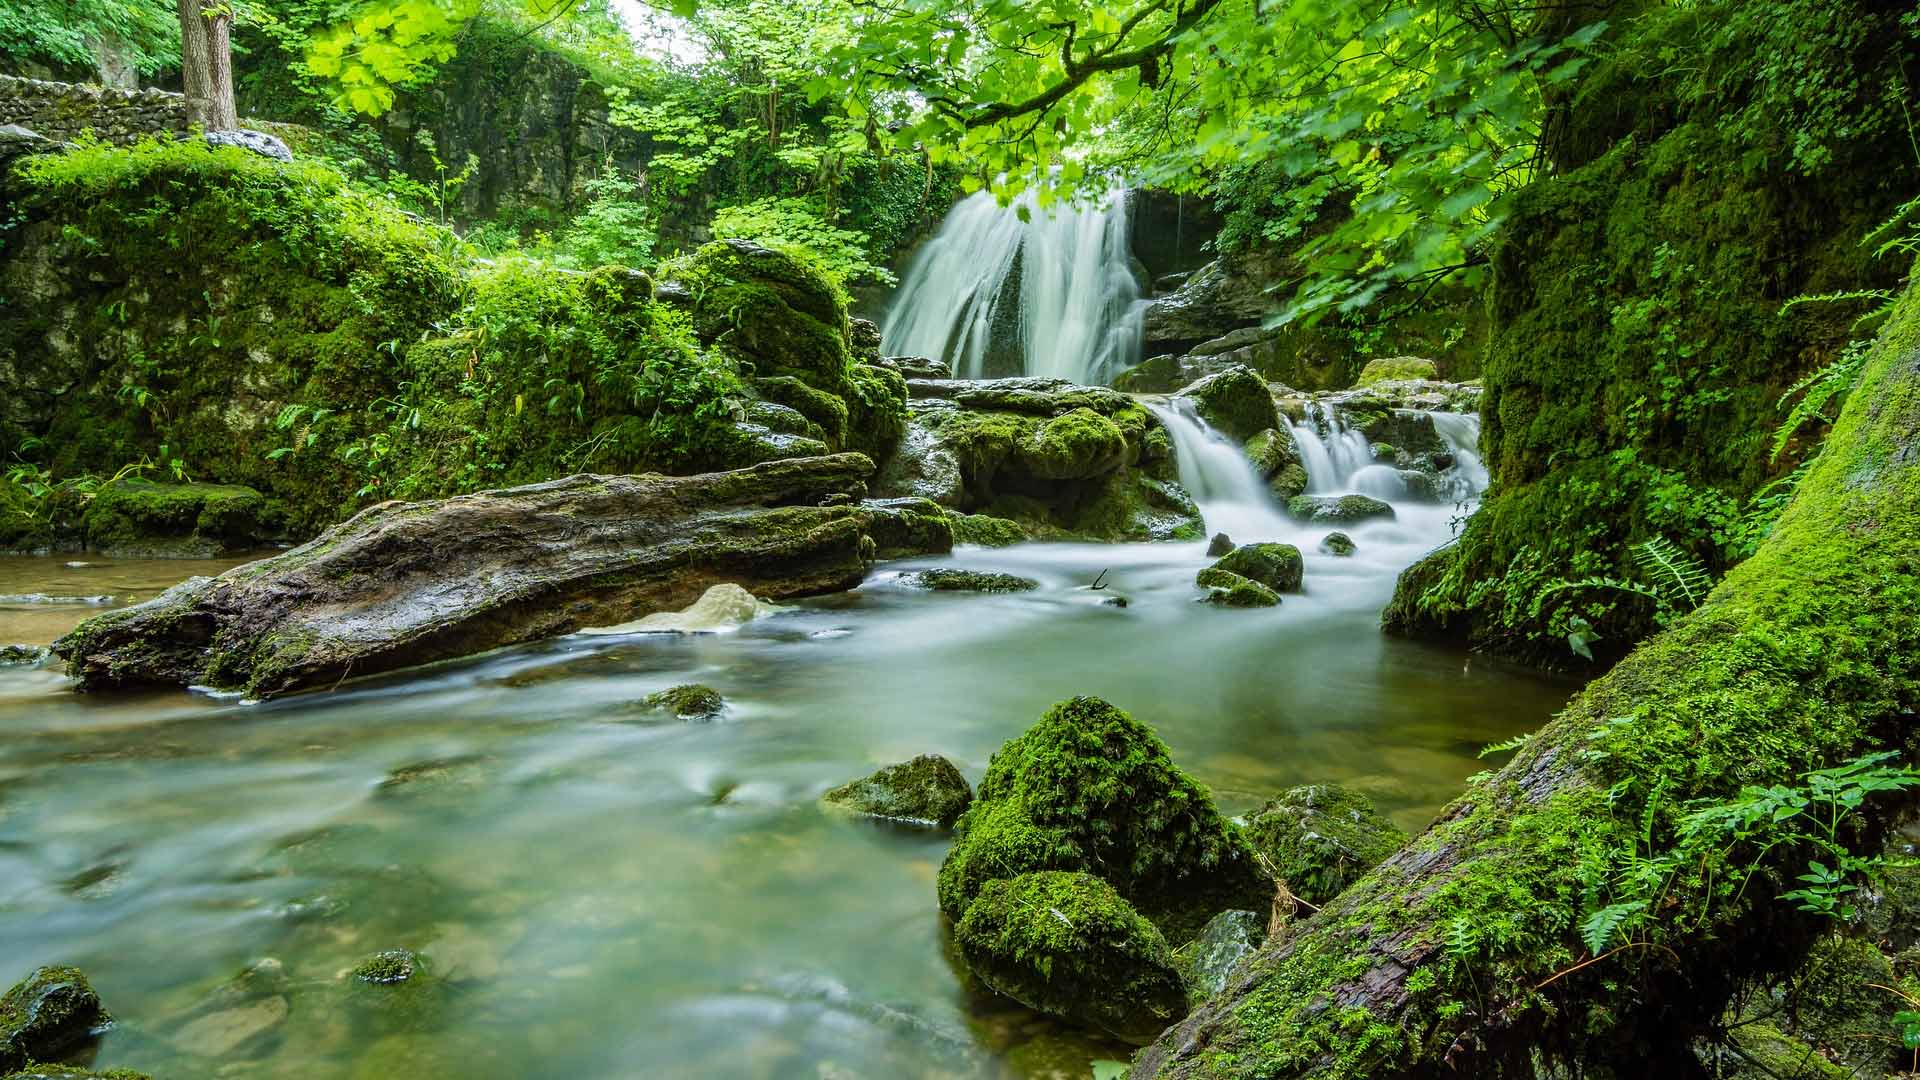 Waterfall beautiful nature wallpaper desktop laptop background images